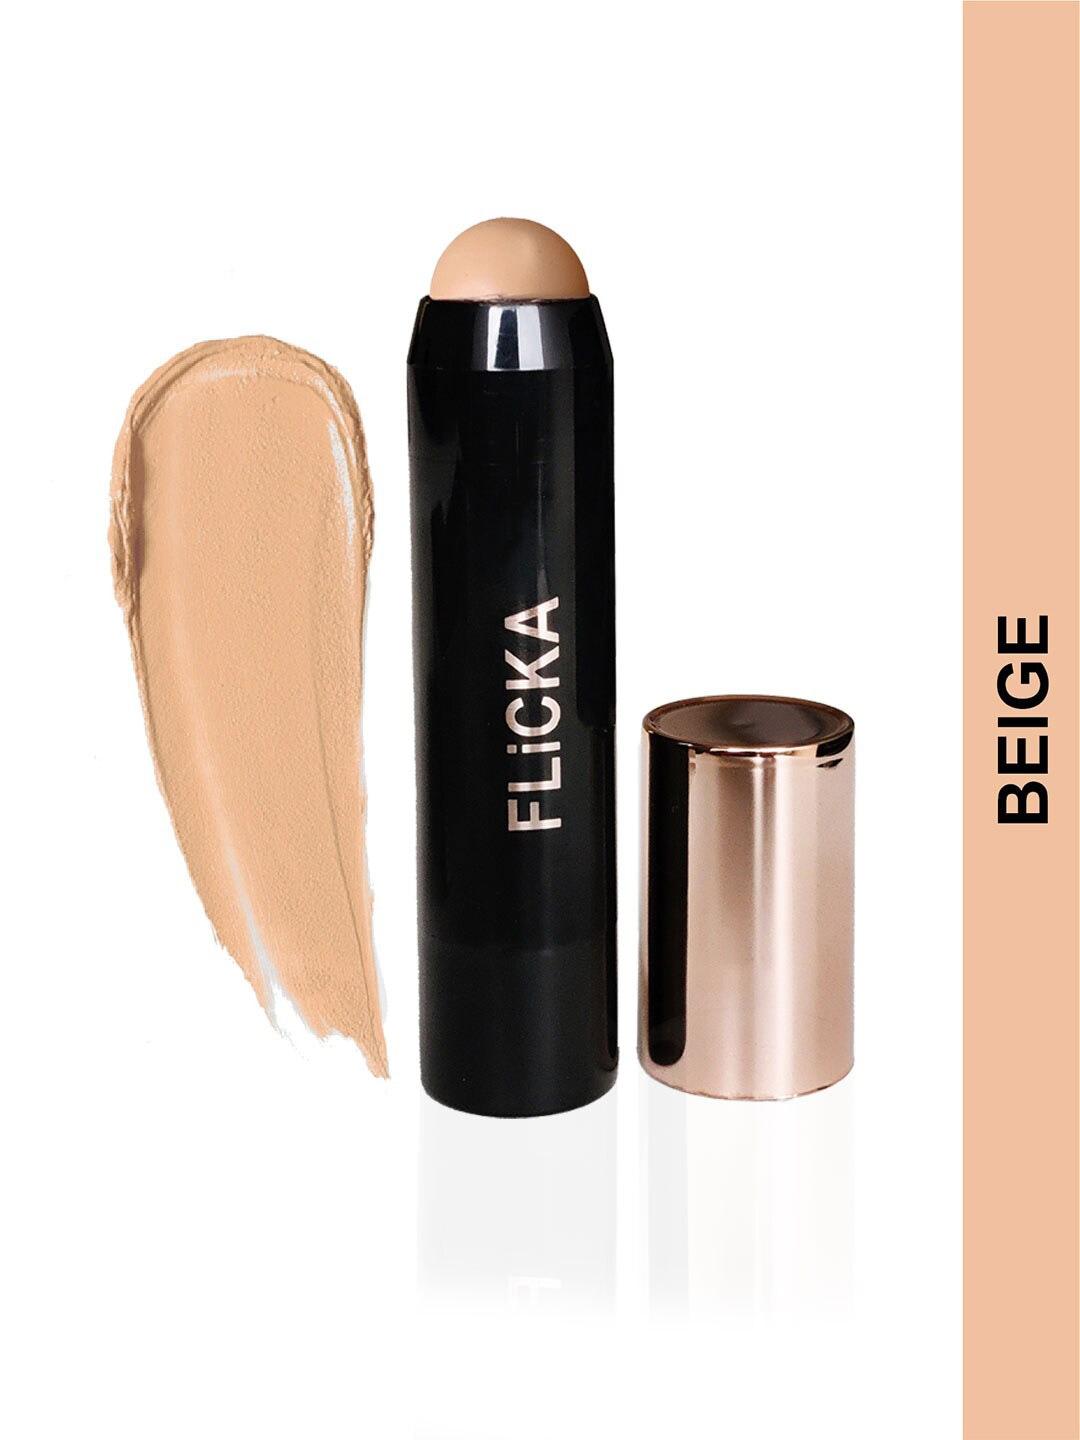 flicka masterstroke makeup stick foundation with spf 7.9g - beige 02